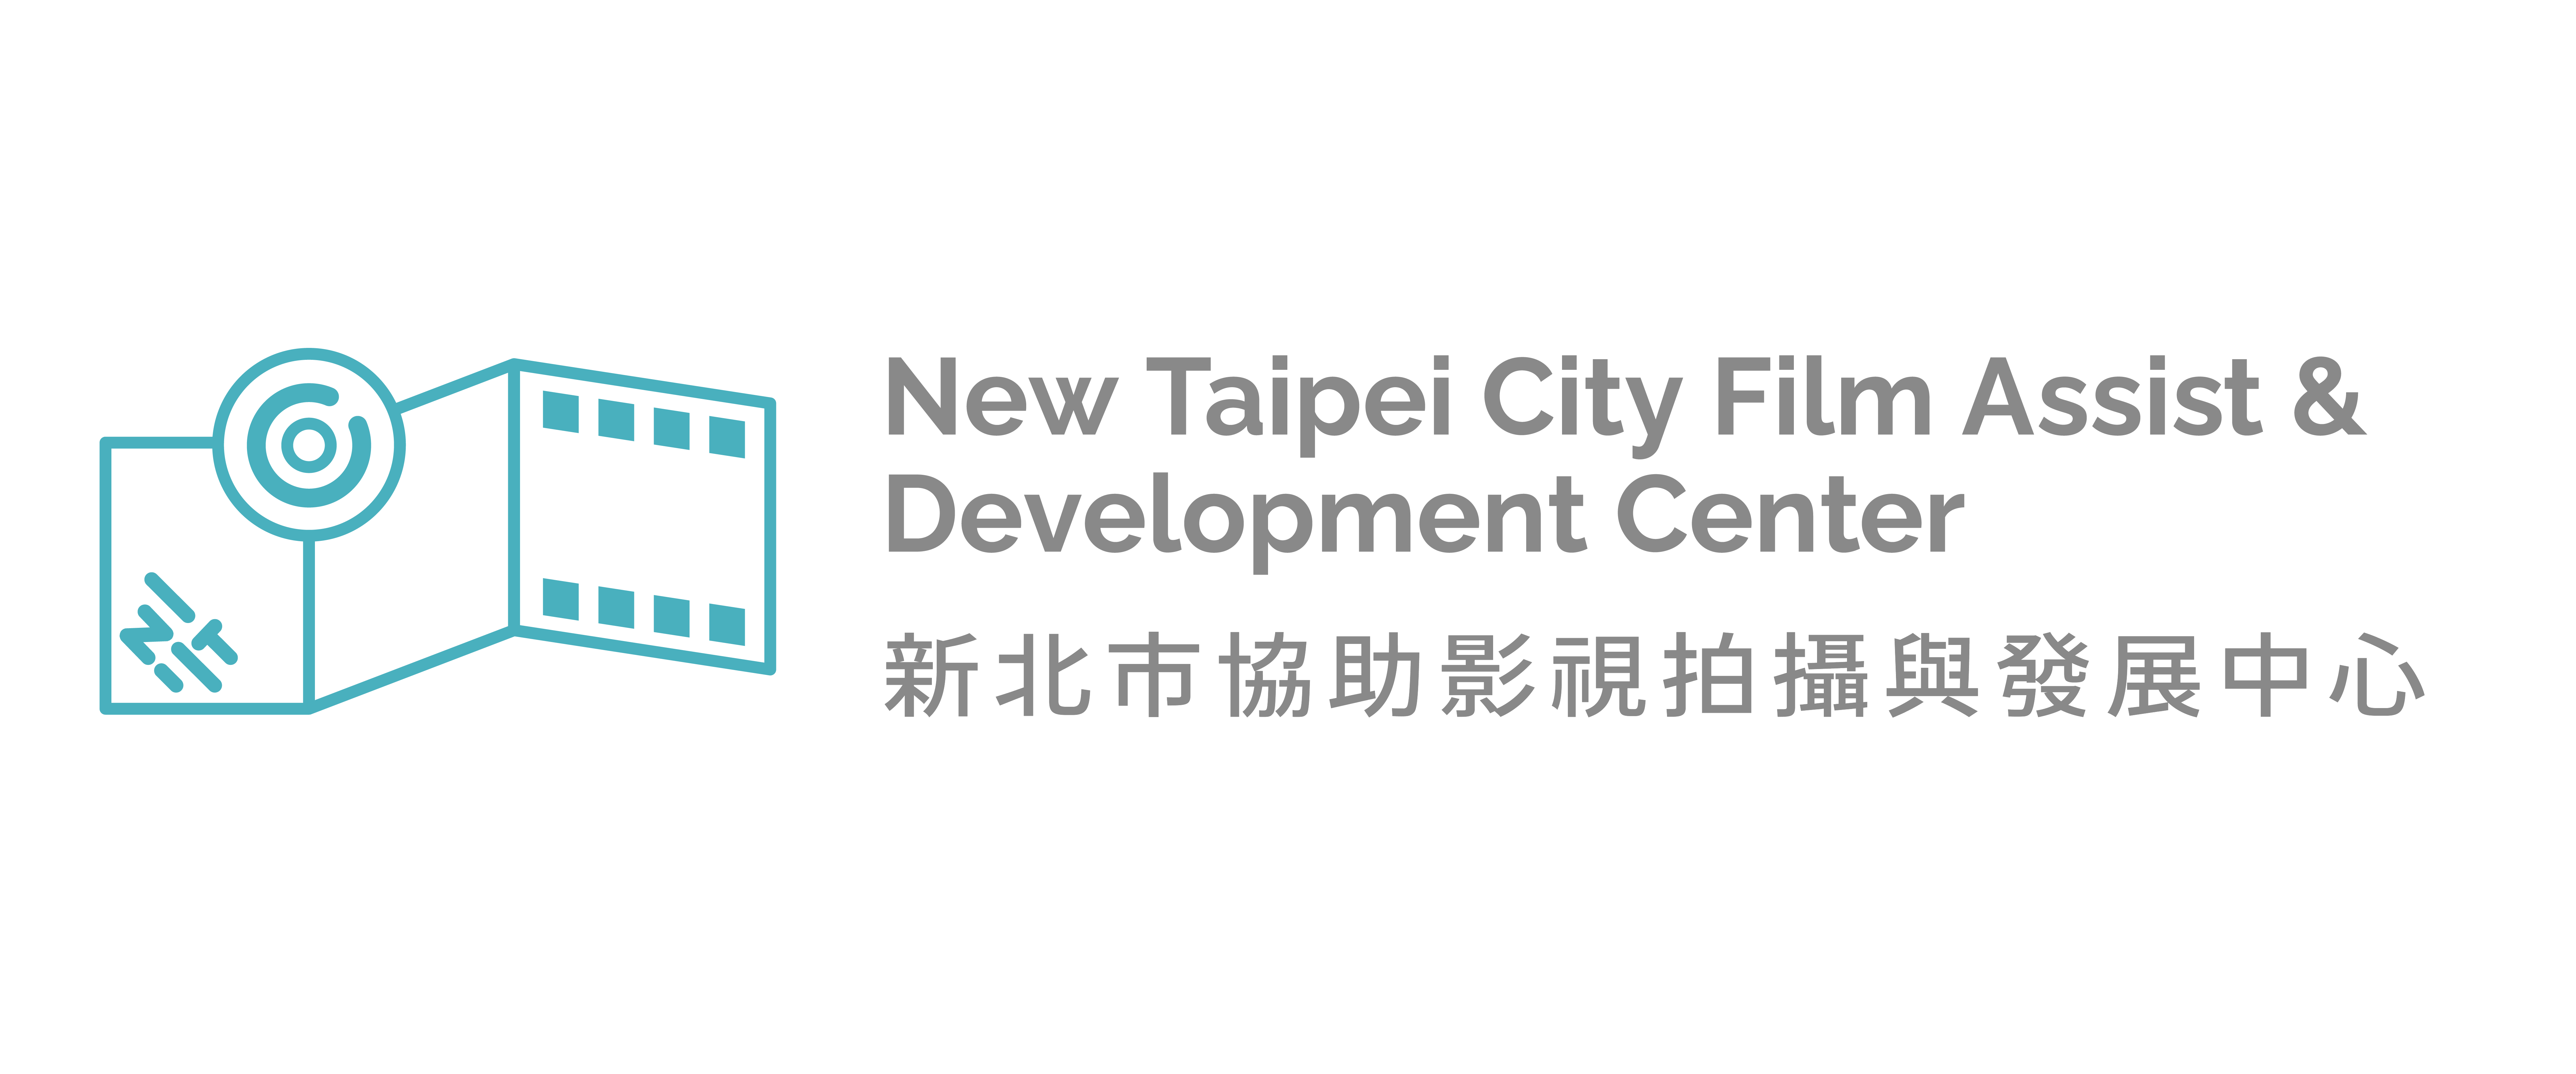 New Taipei City Film Assist and Development Center logo